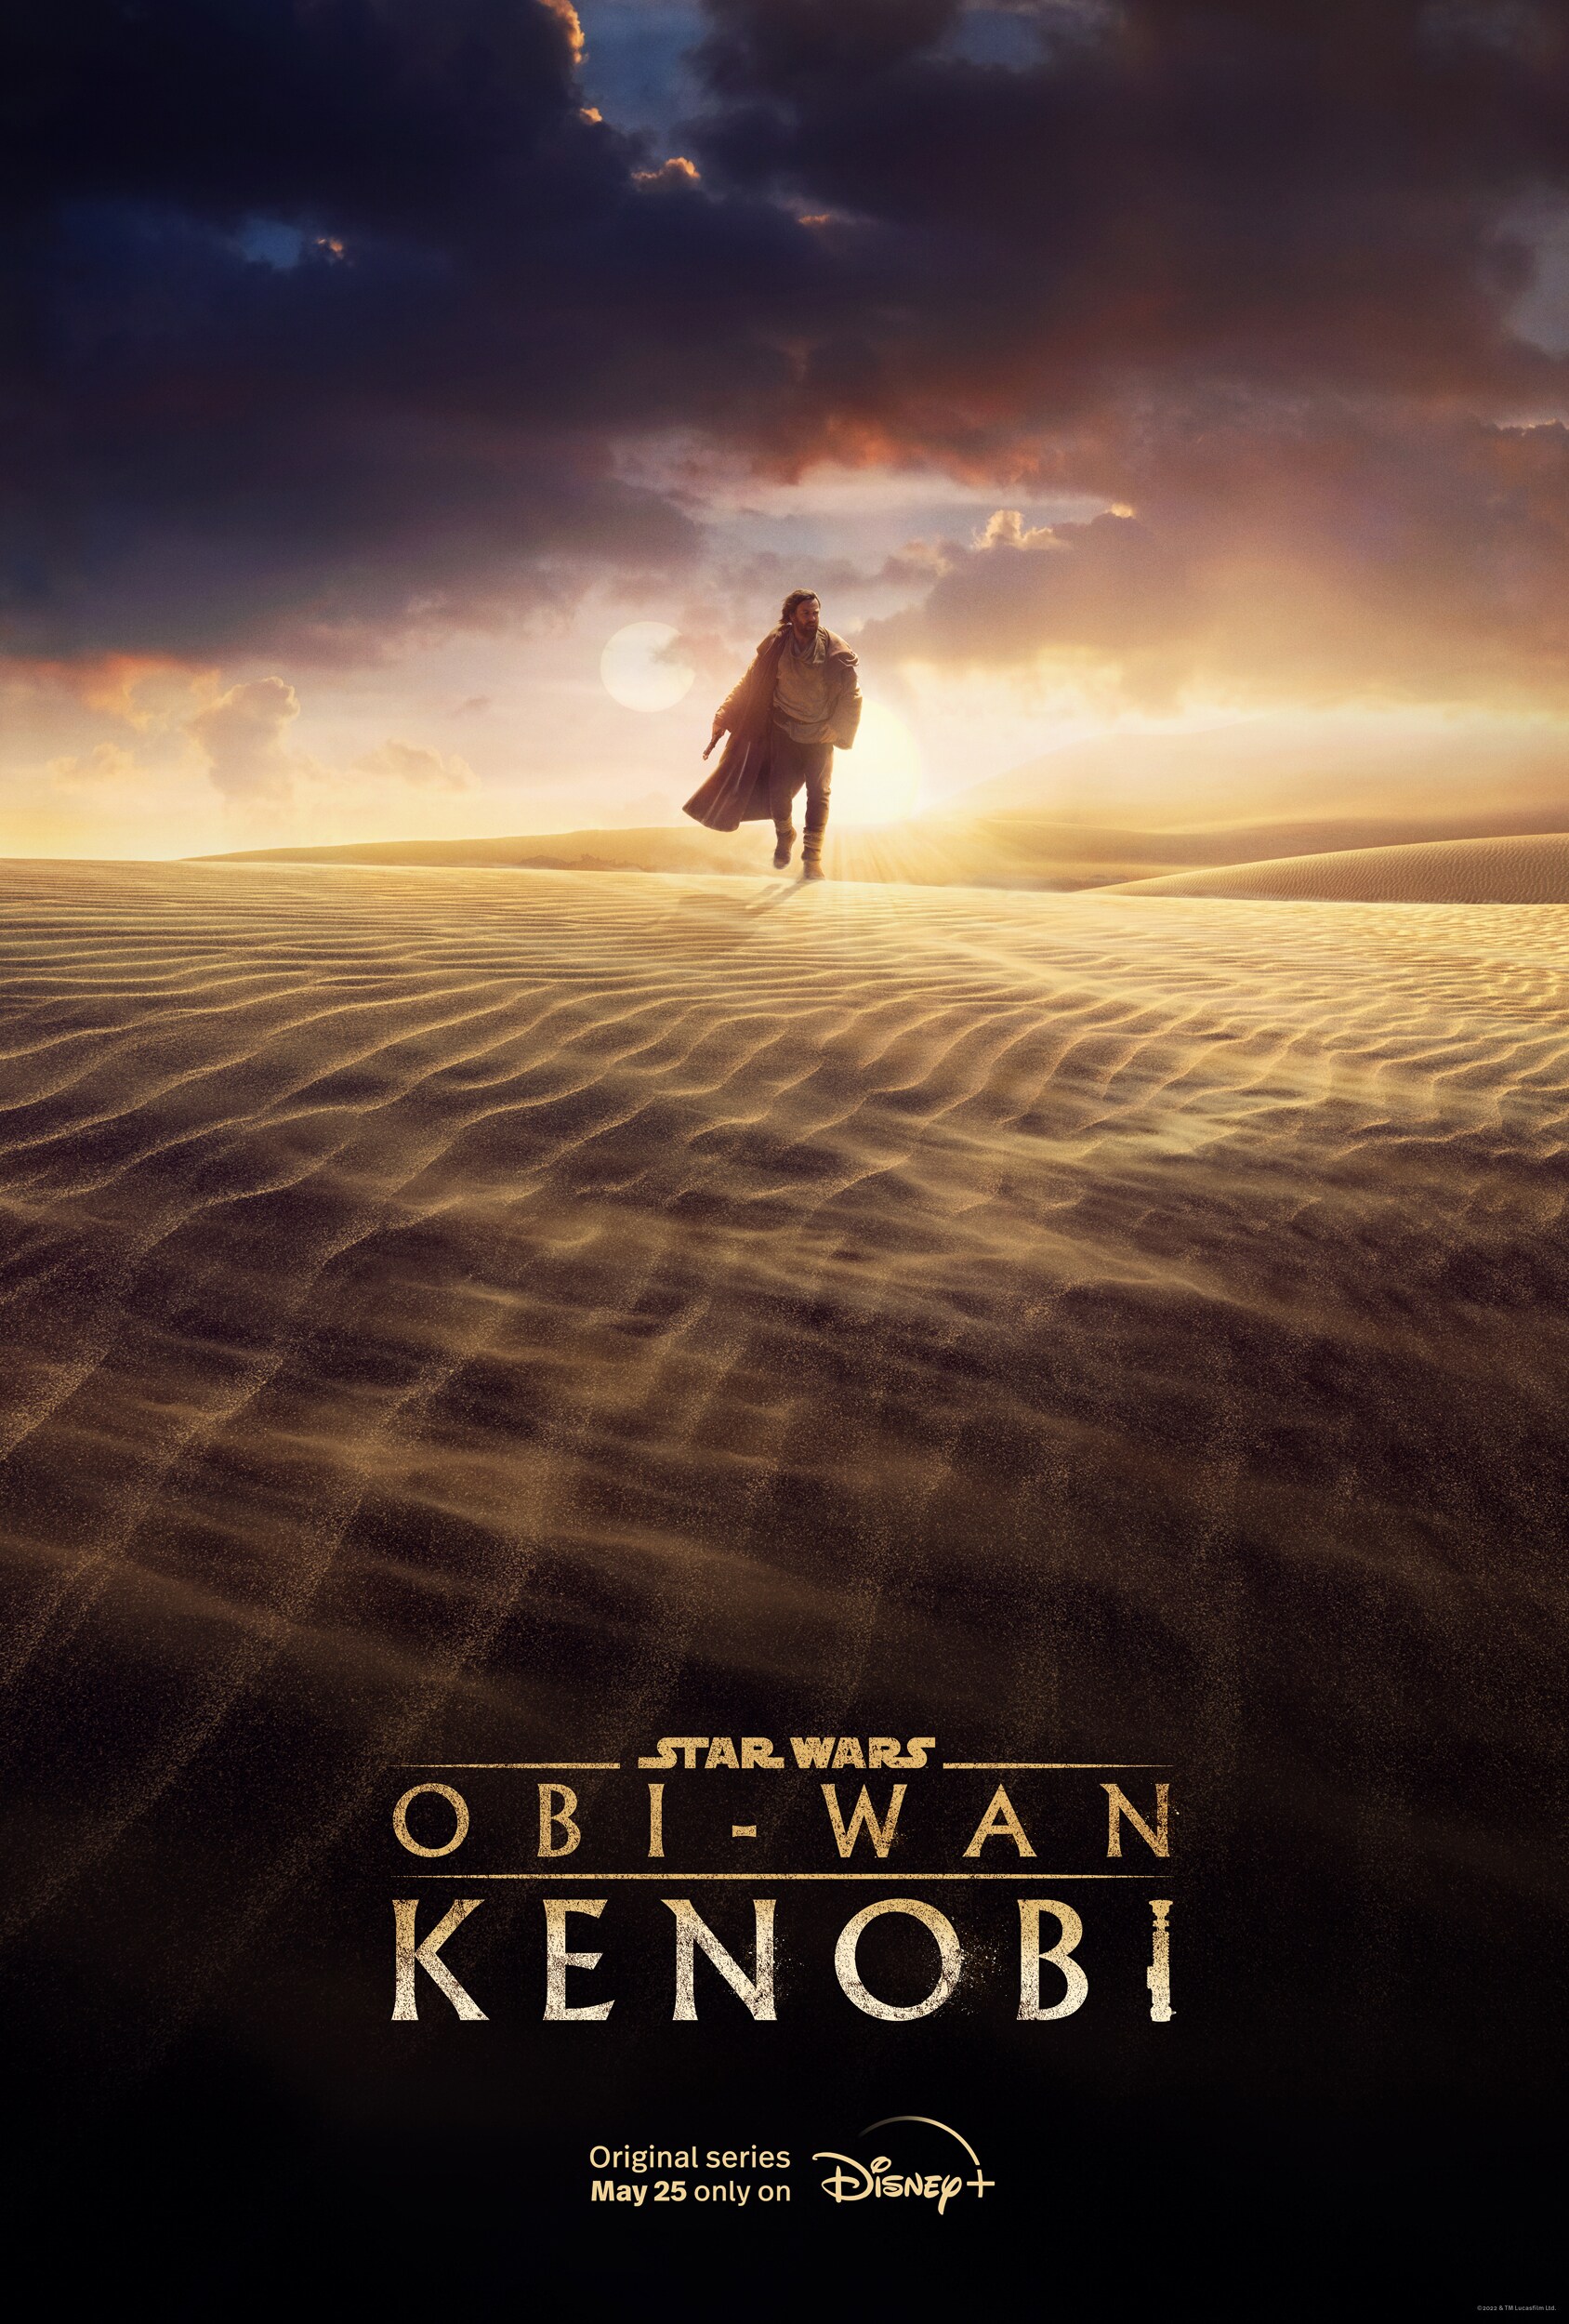 Disney+ Limited Series “ObiWan Kenobi” Debuts On May 25 Disney Plus